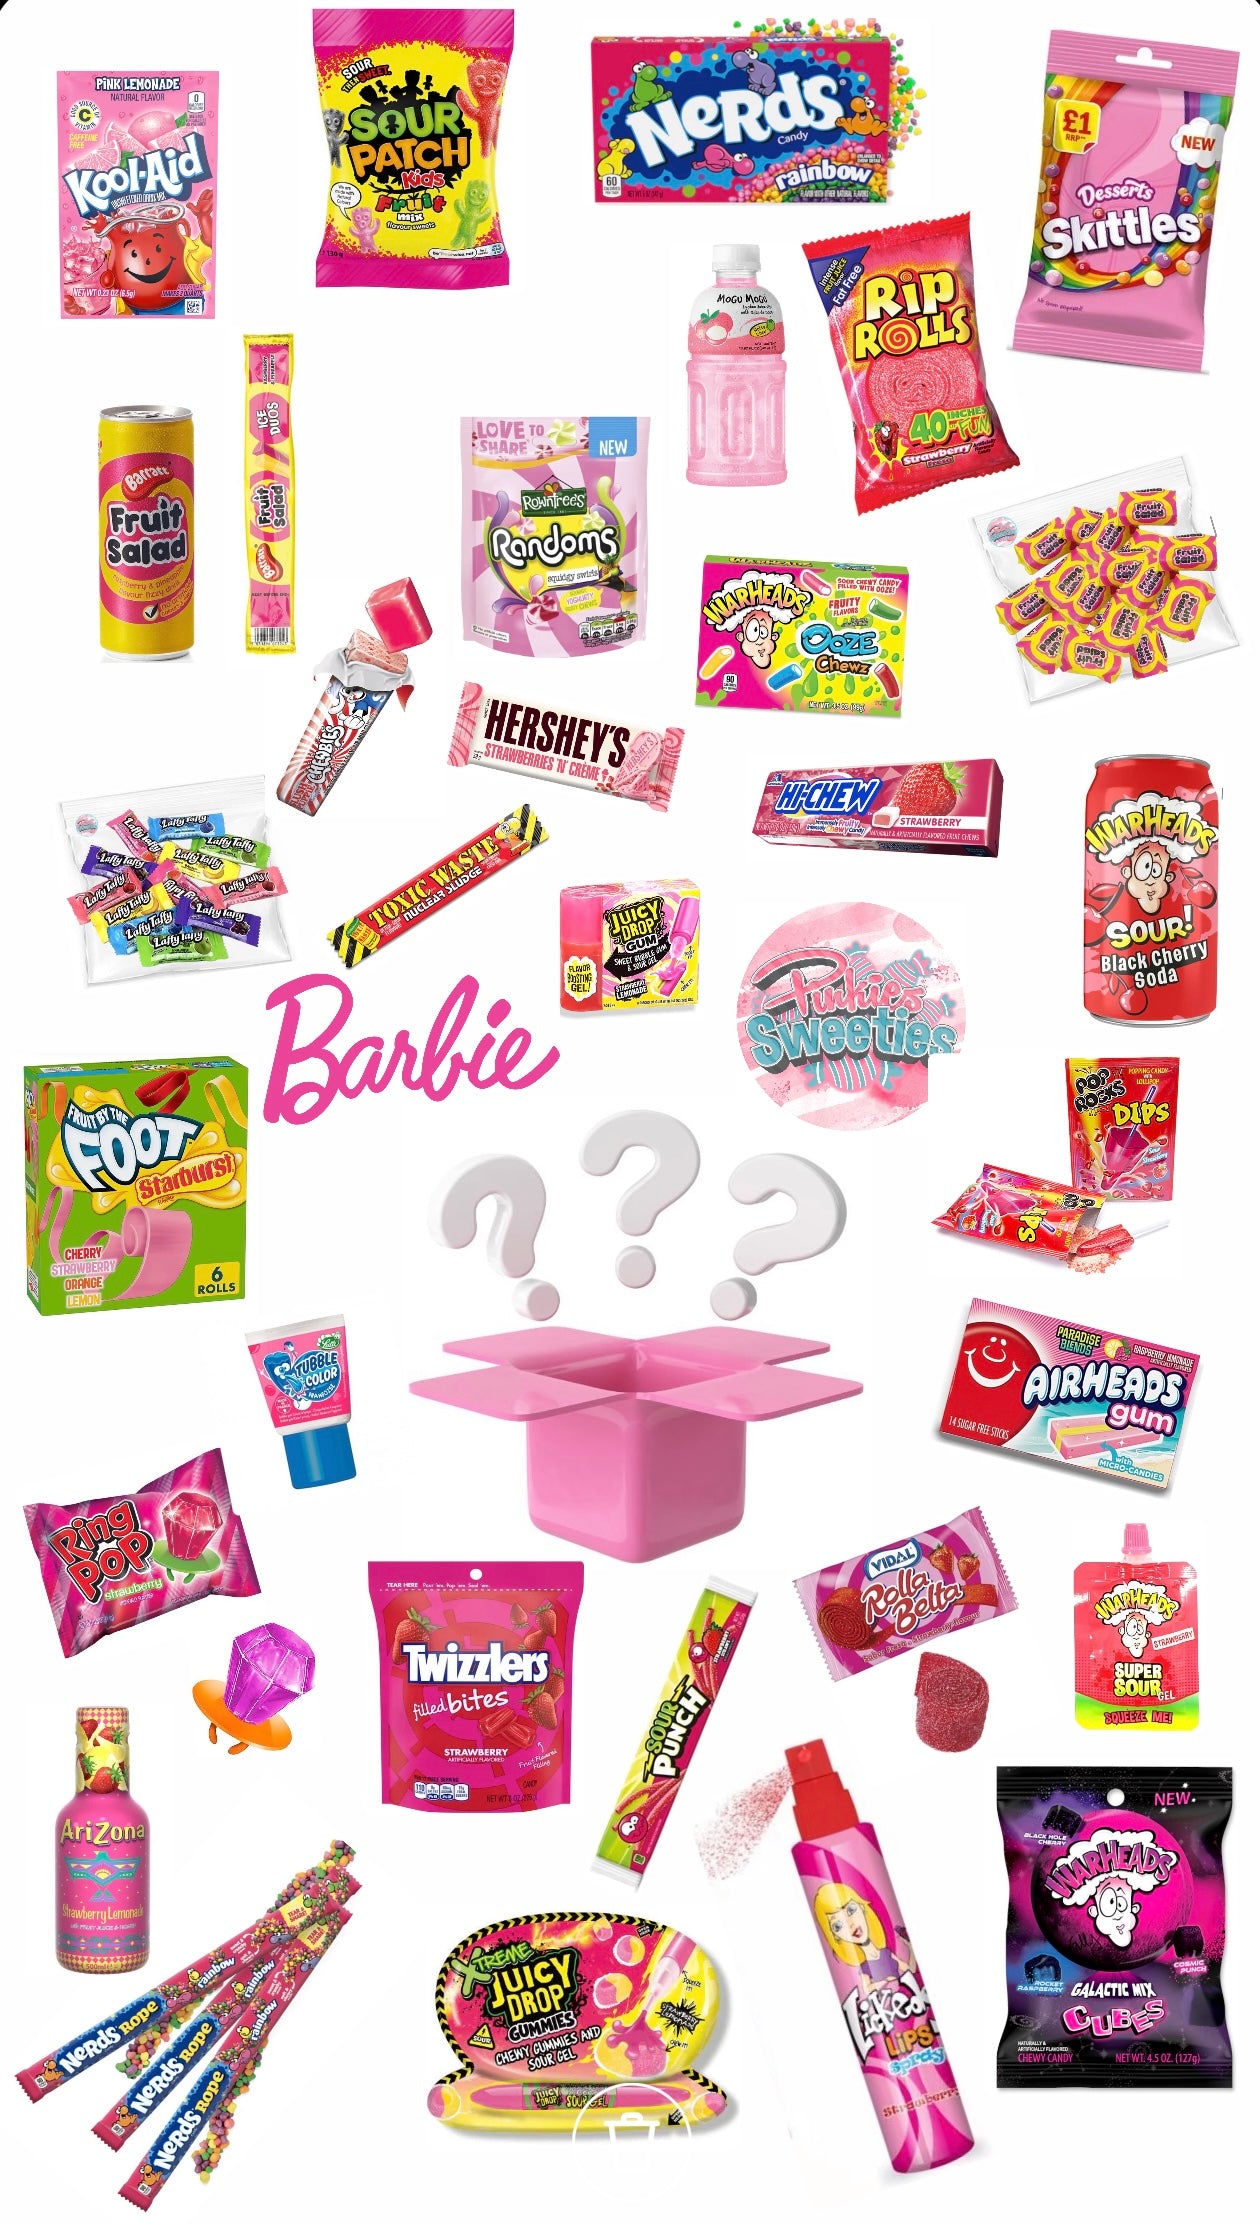 Pink mystery box